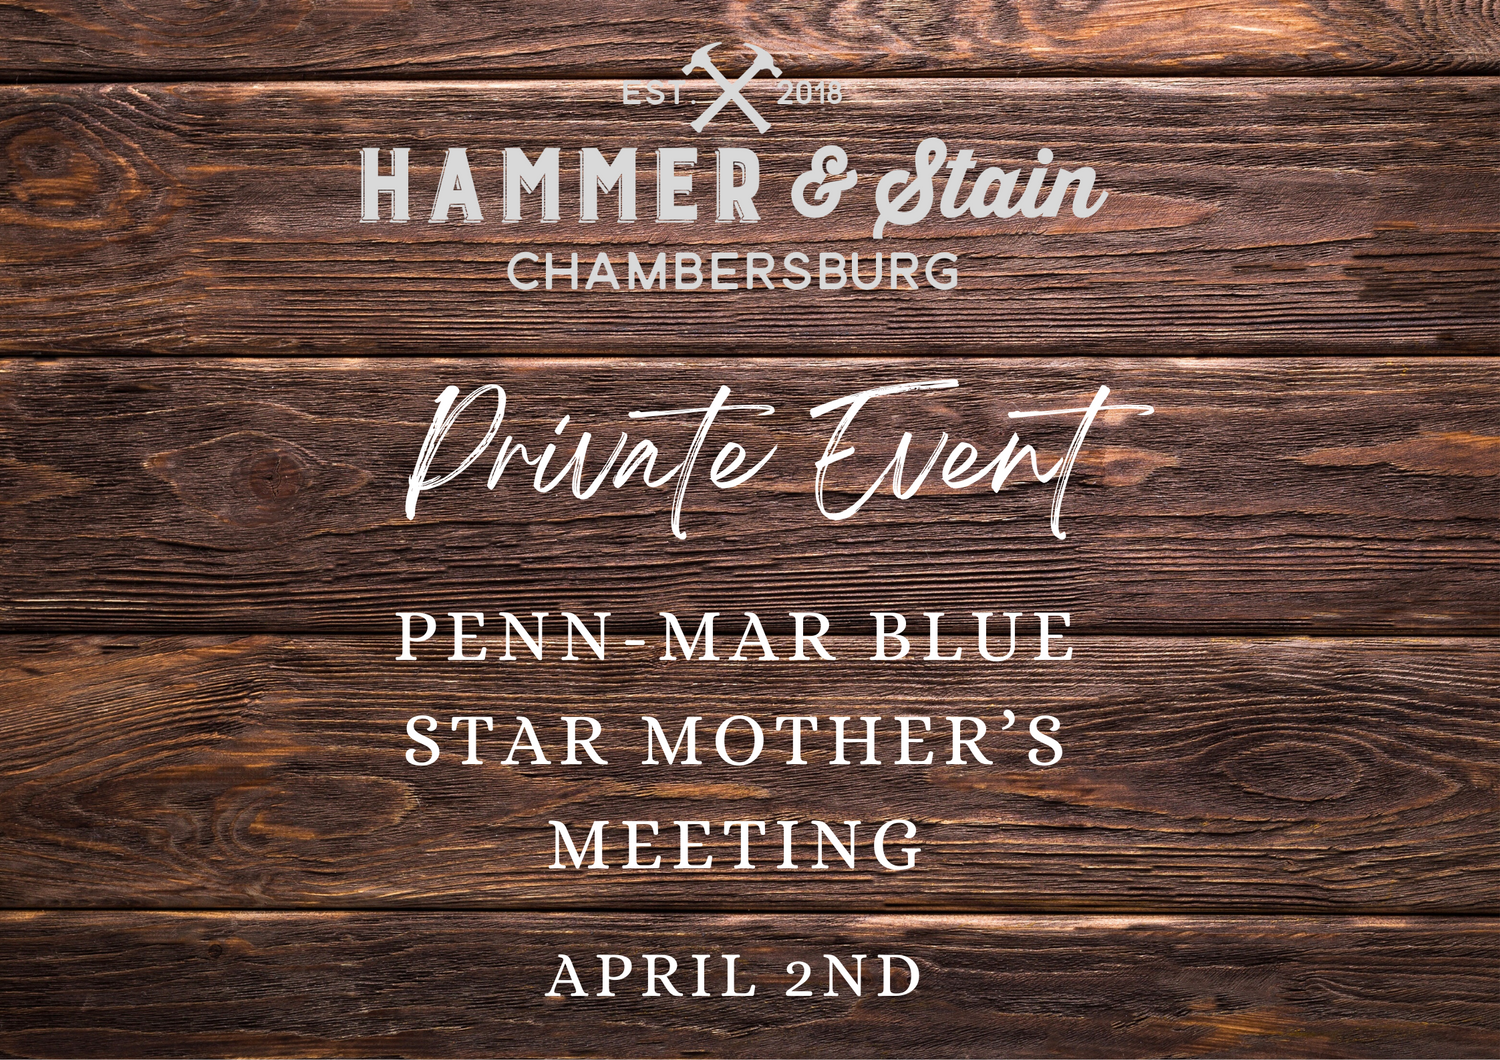 04/02/24 Penn-Mar Blue Star Mothers Meeting 7pm